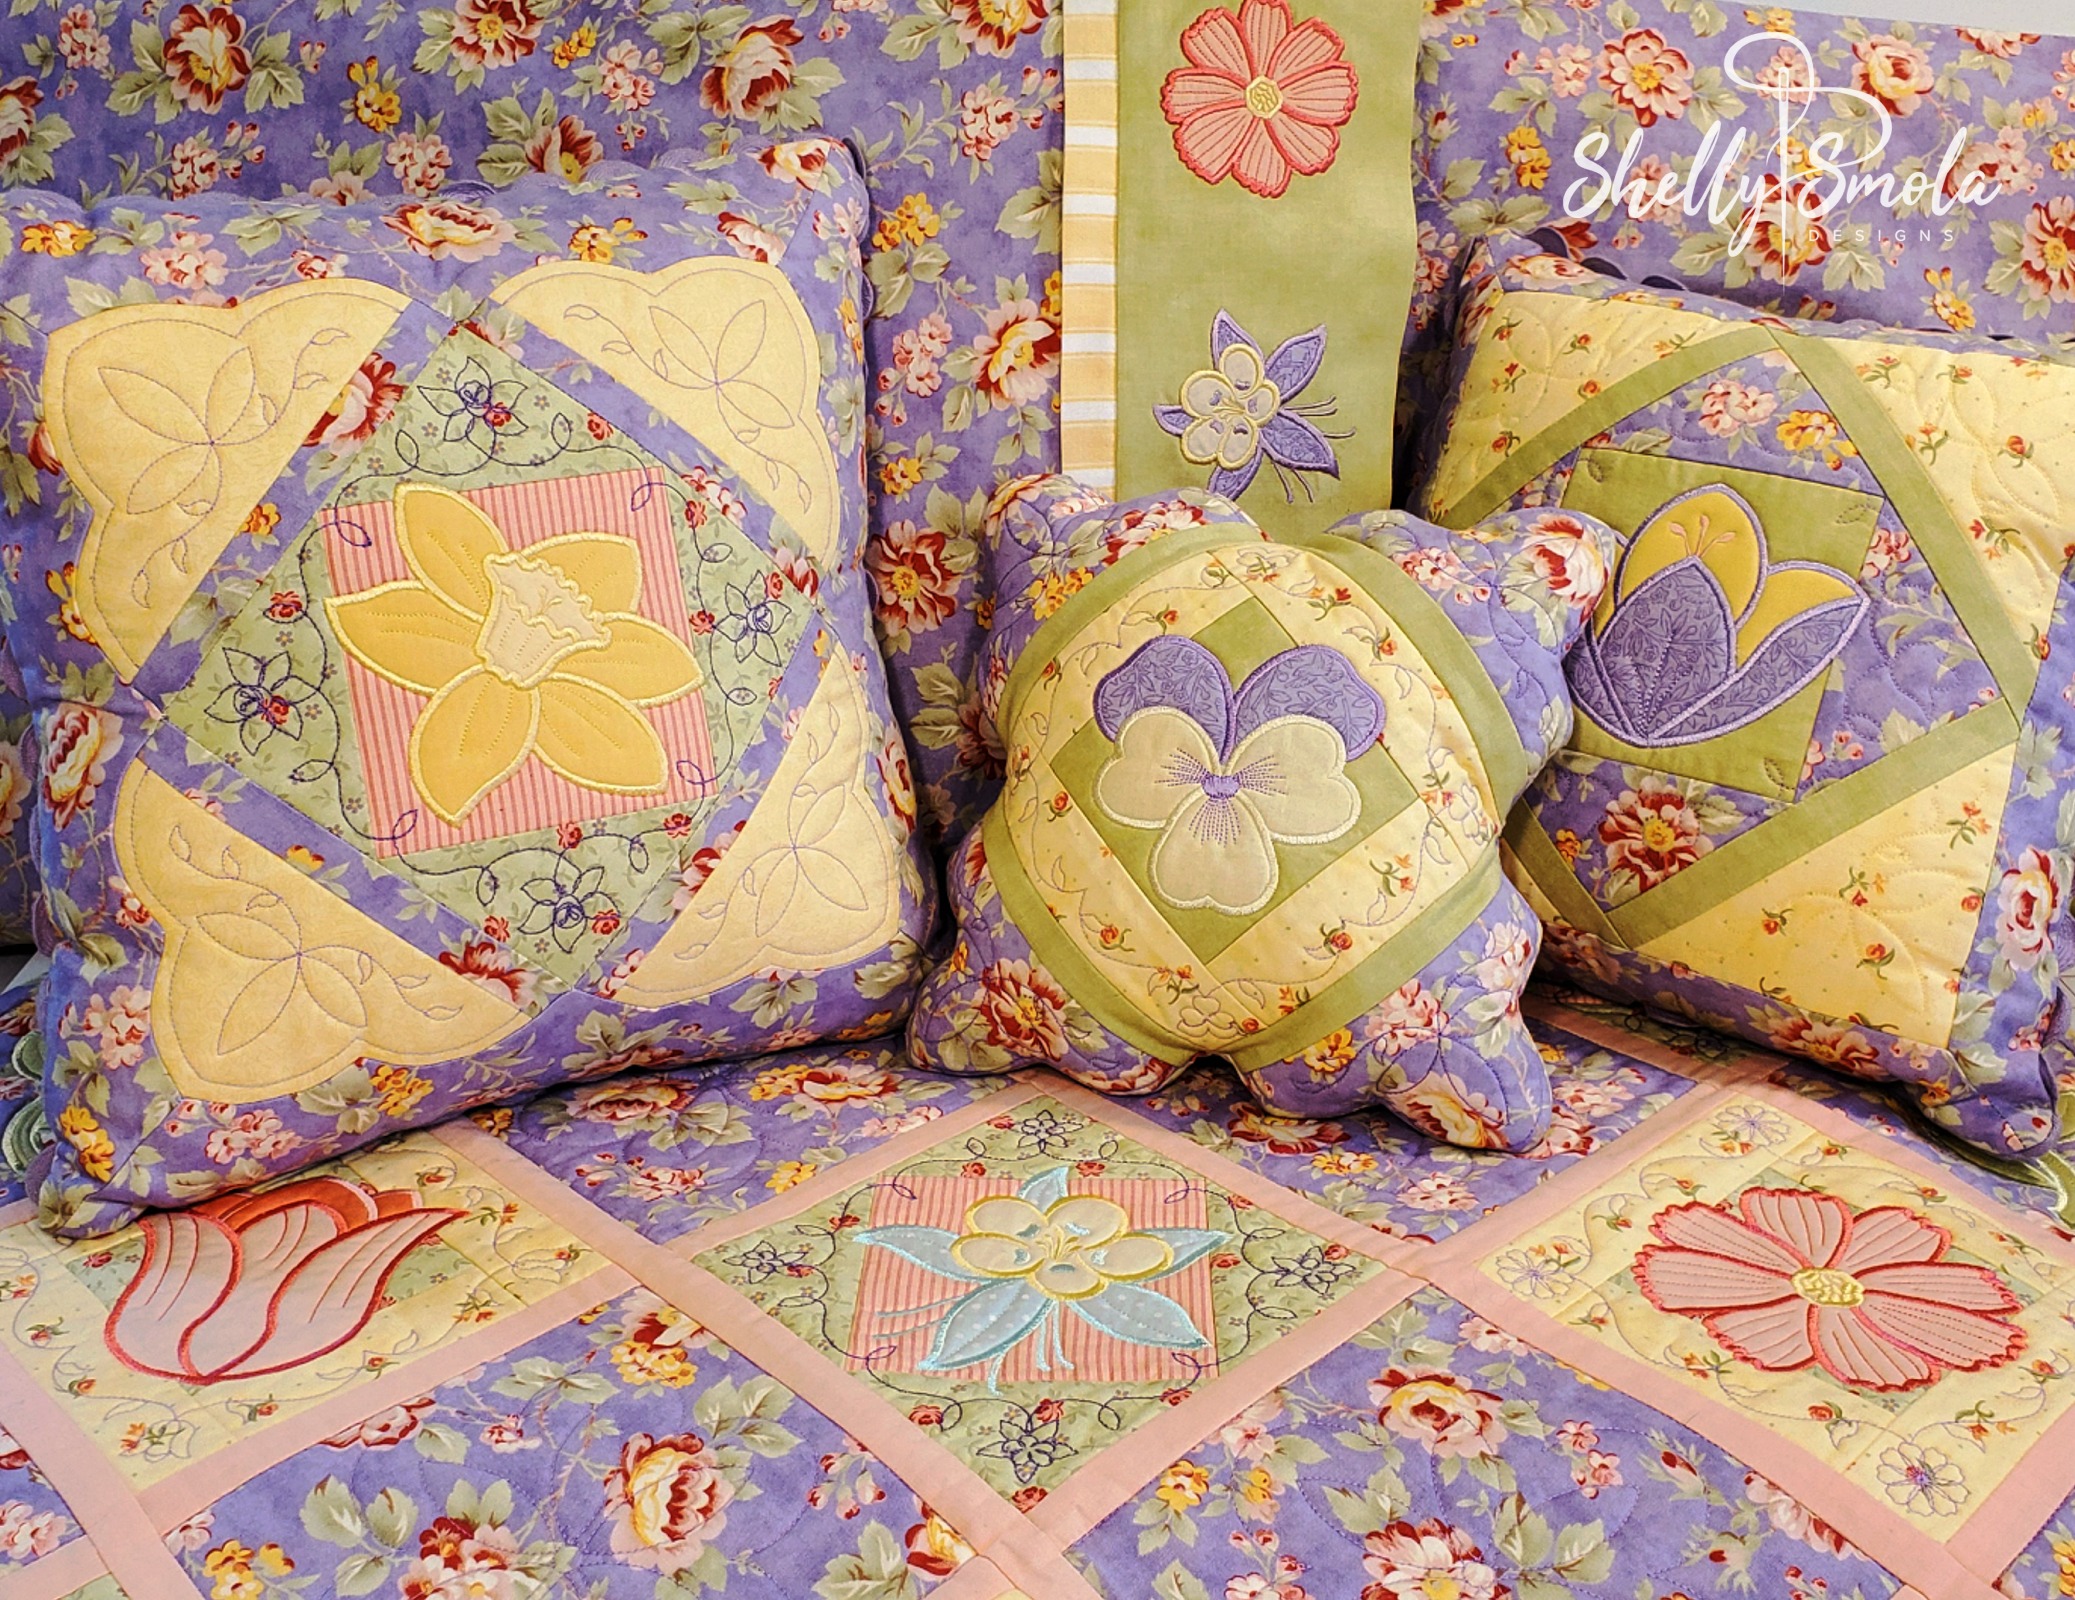 Flower Garden Quilt Pillows by Shelly Smola